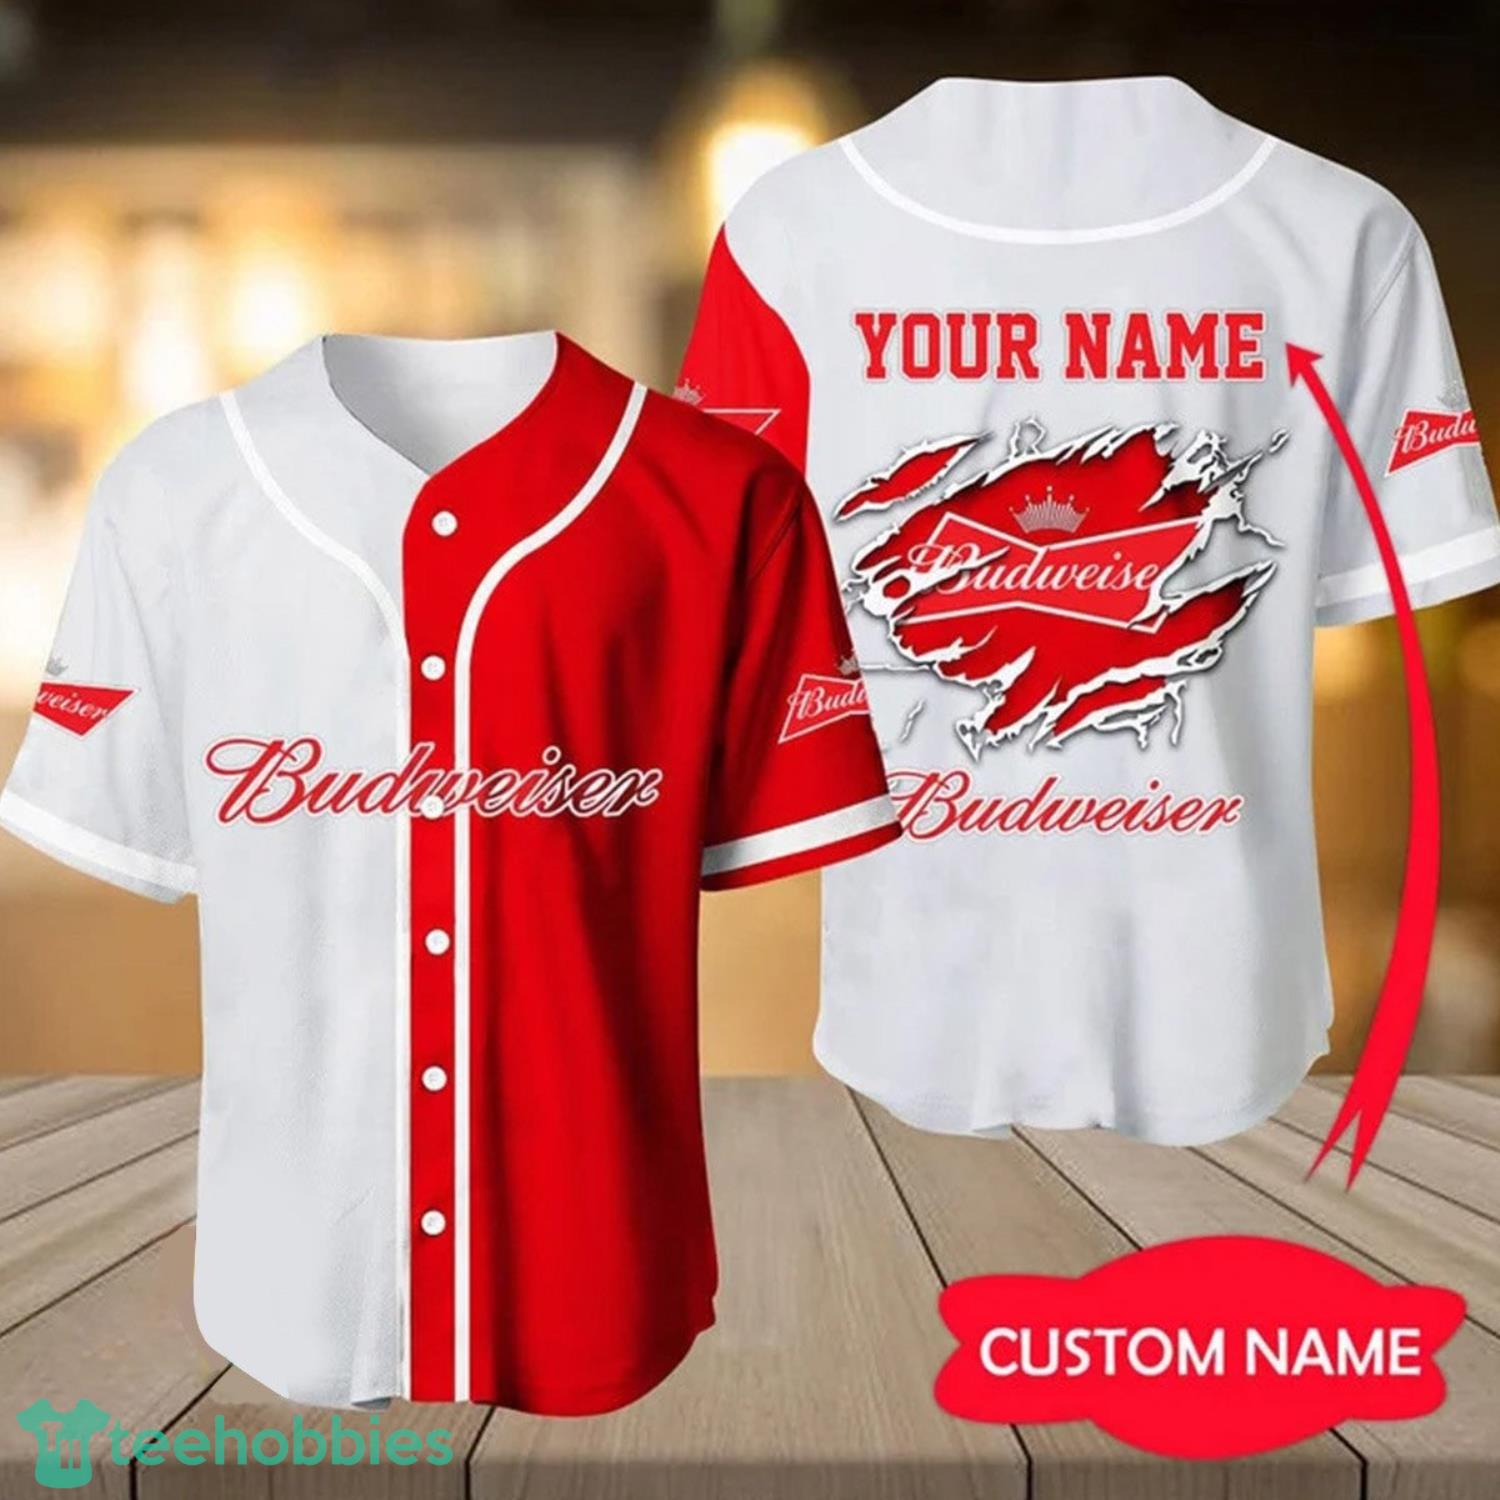 Personalized & Red Budweiser Baseball Jersey Shirt Product Photo 1